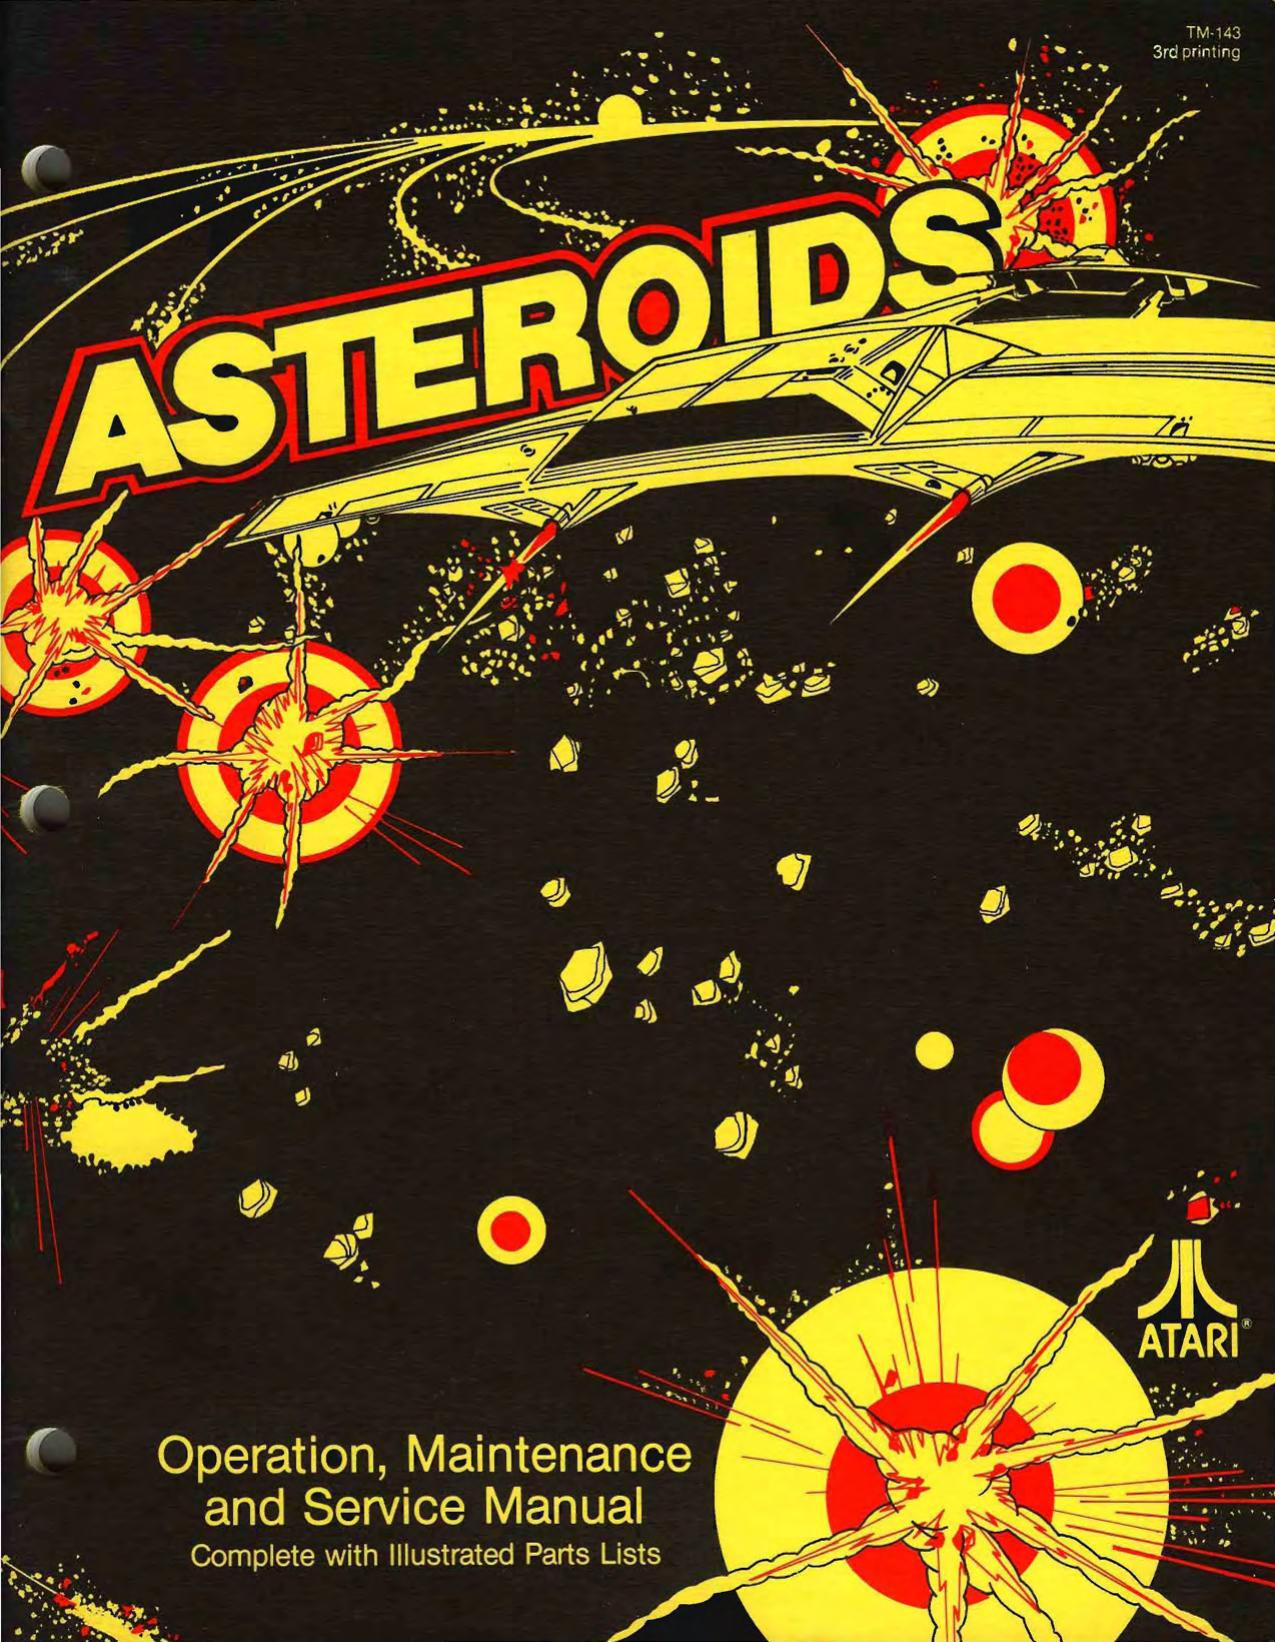 Asteroids TM-143 3rd Printing